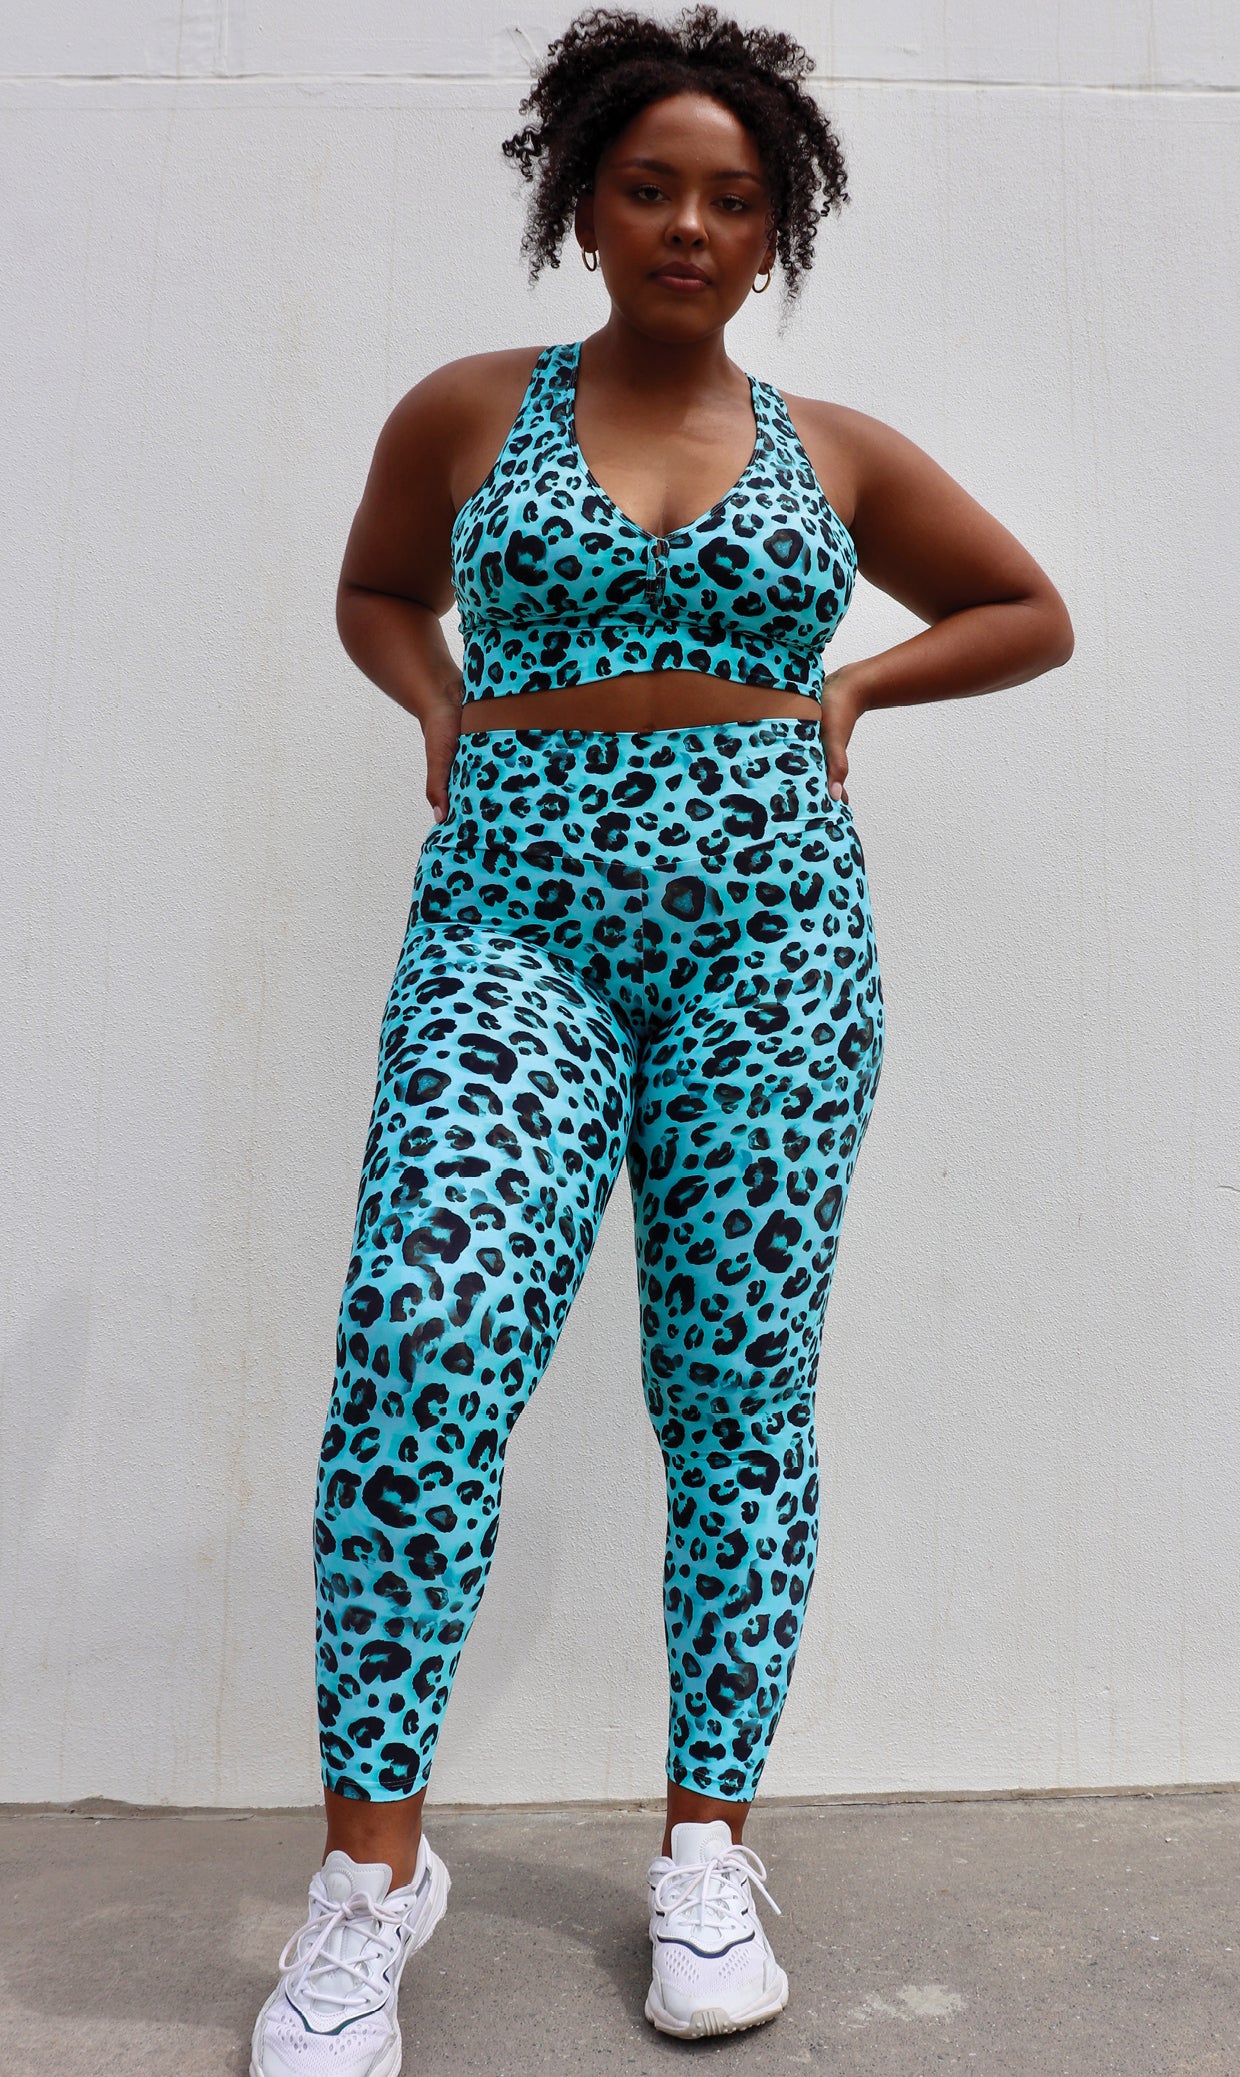 Lady wearing black and aqua leopard print ultra high waist scrunch bum leggings & matching racer back bra